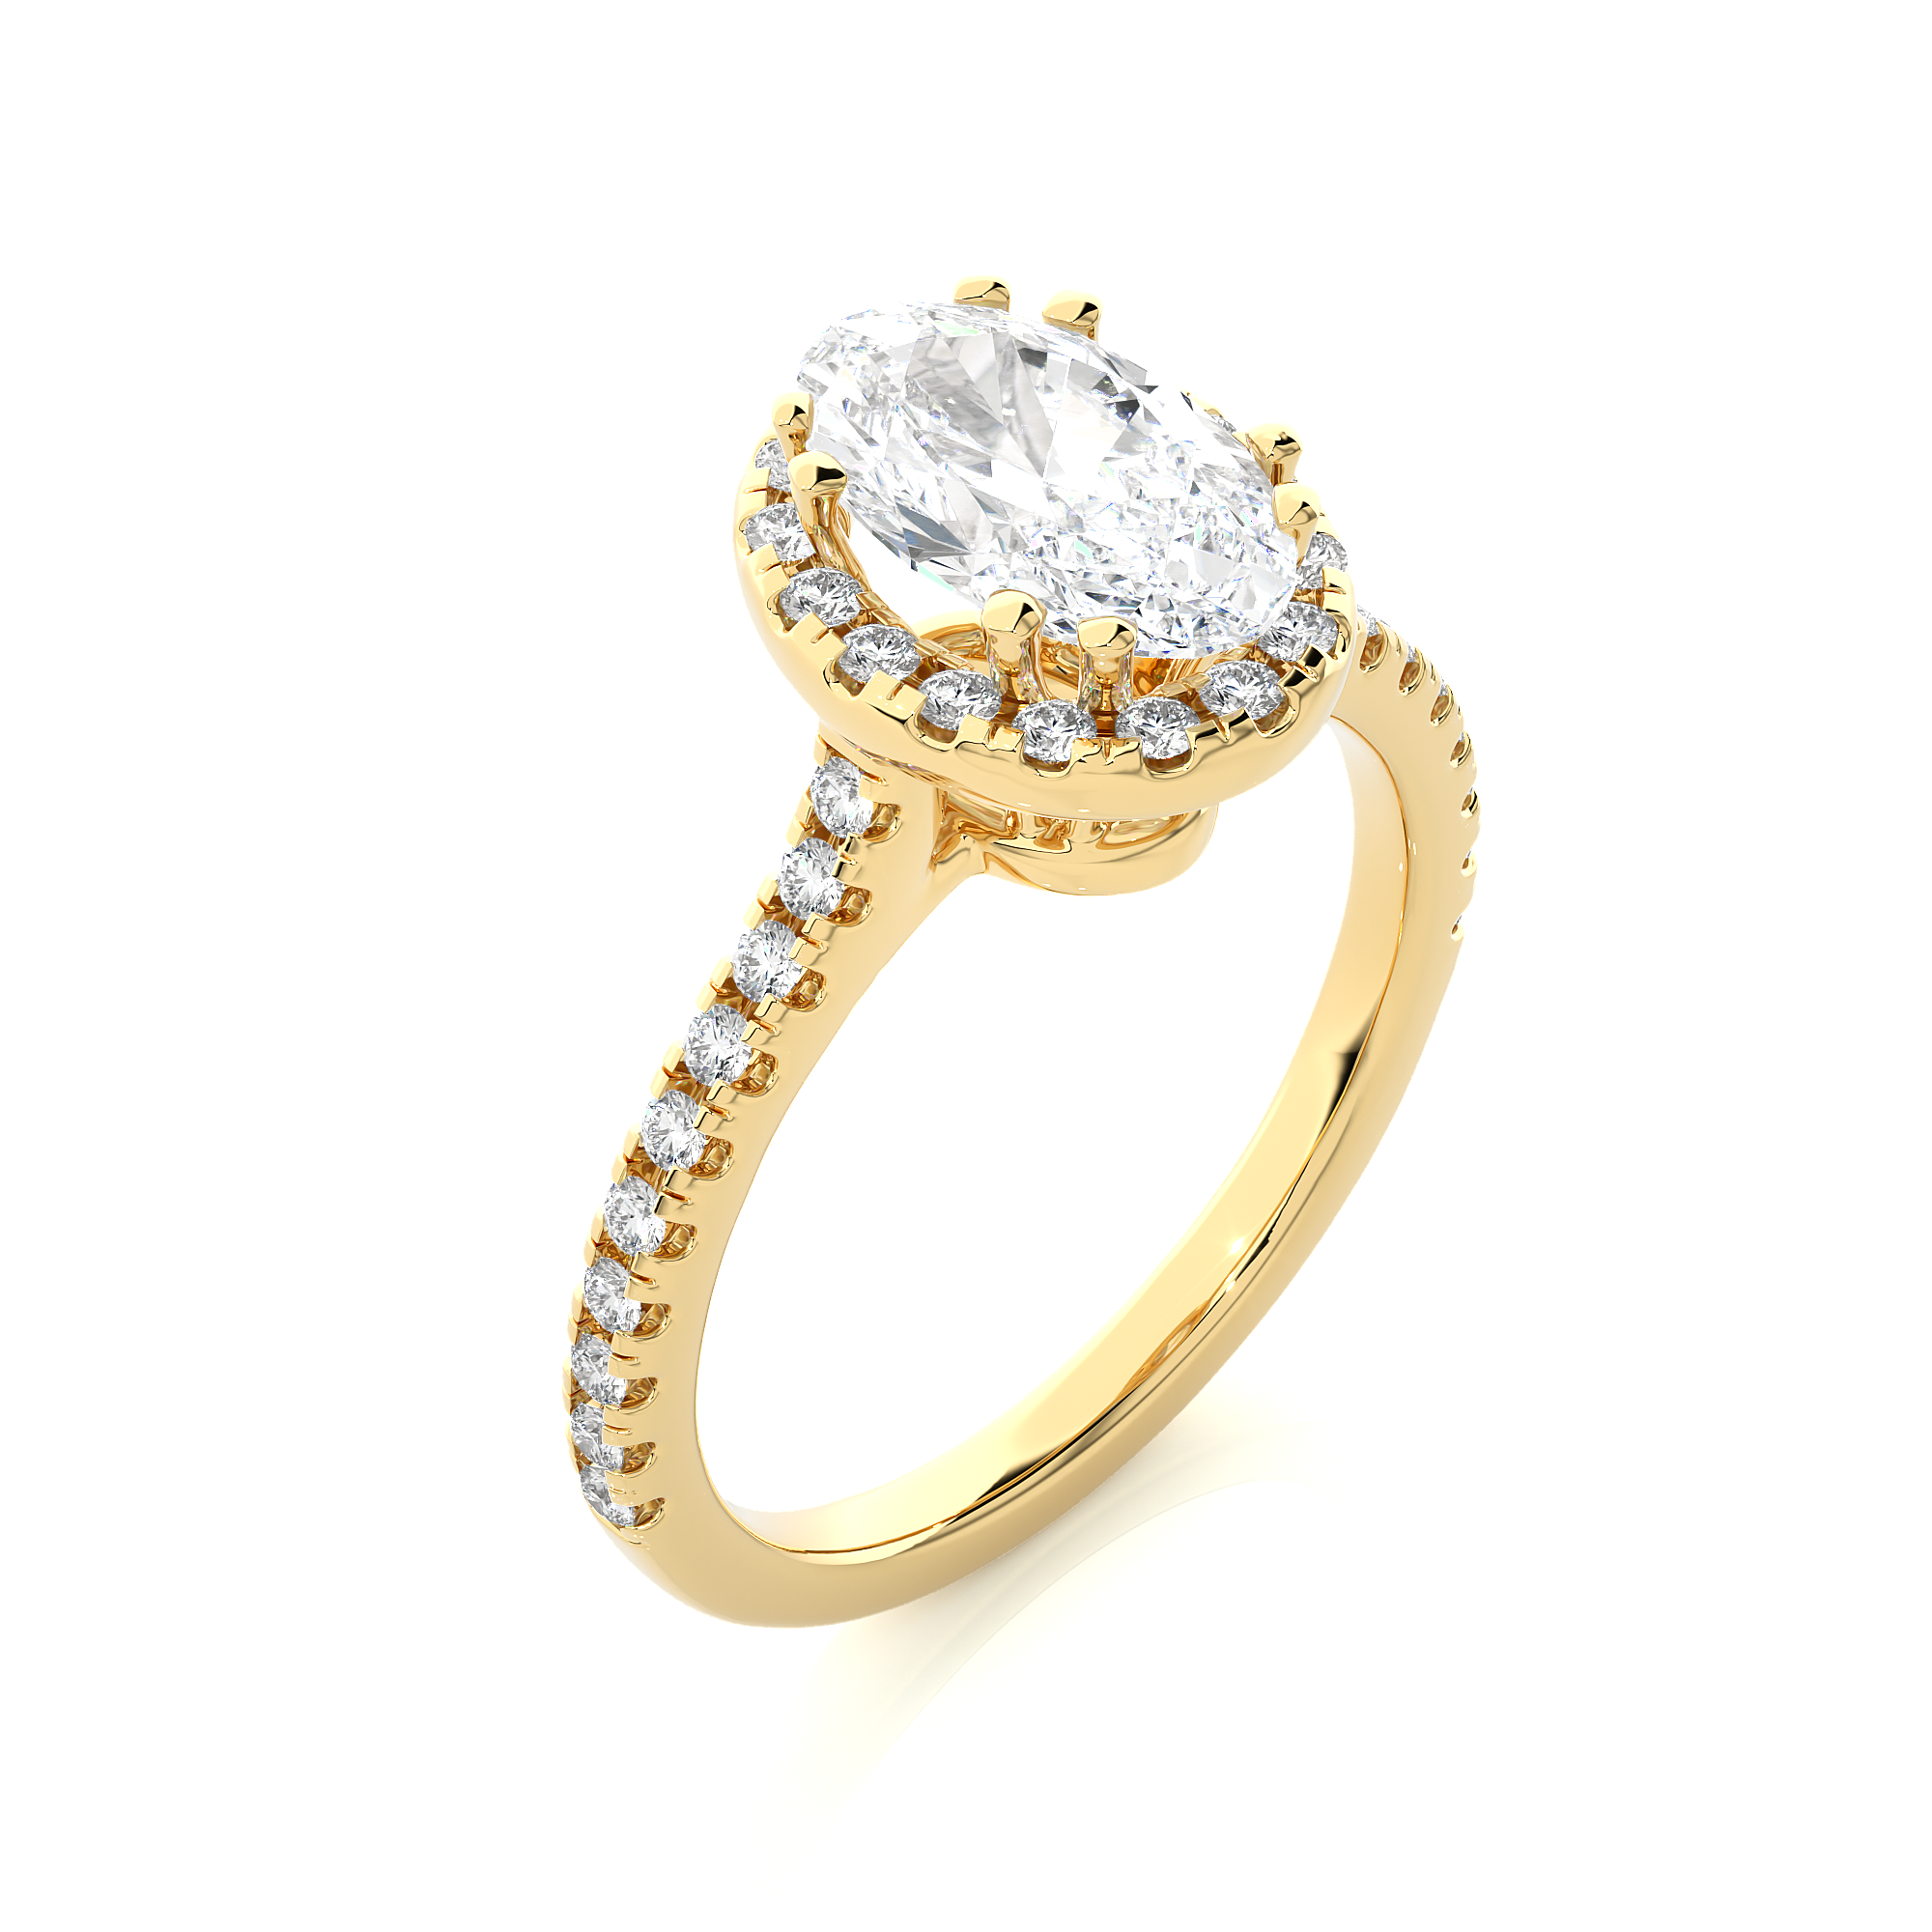 1.49Ct Oval Cut Solitaire Diamond Ring in Yellow Gold - Blu Diamonds